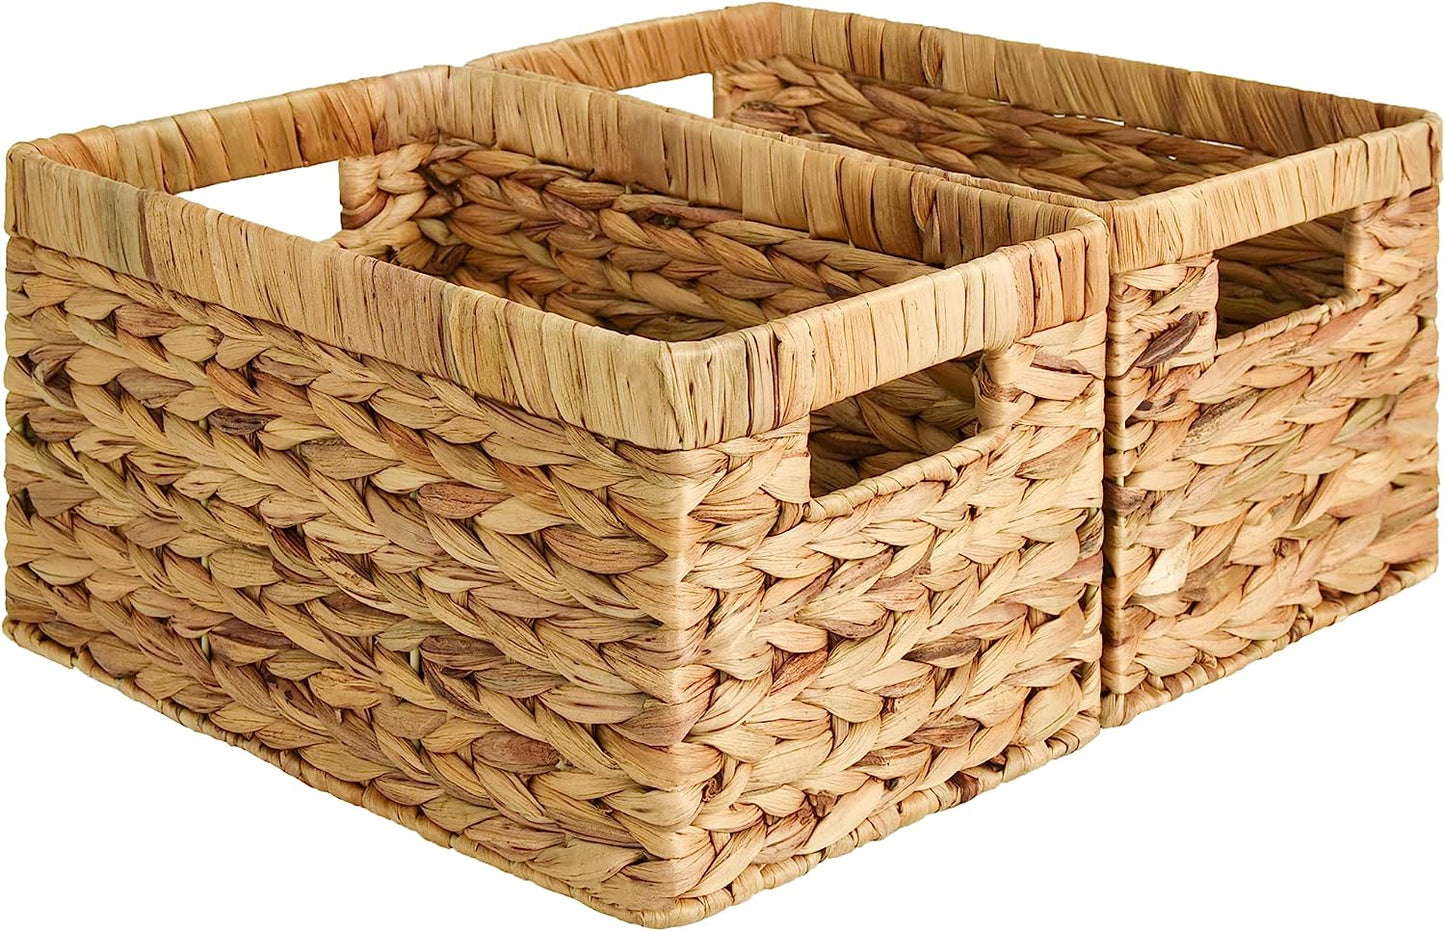 StorageWorks Water Hyacinth Storage Baskets, Rectangular Wicker Baskets with Built-in Handles, Medium, 2-Pack